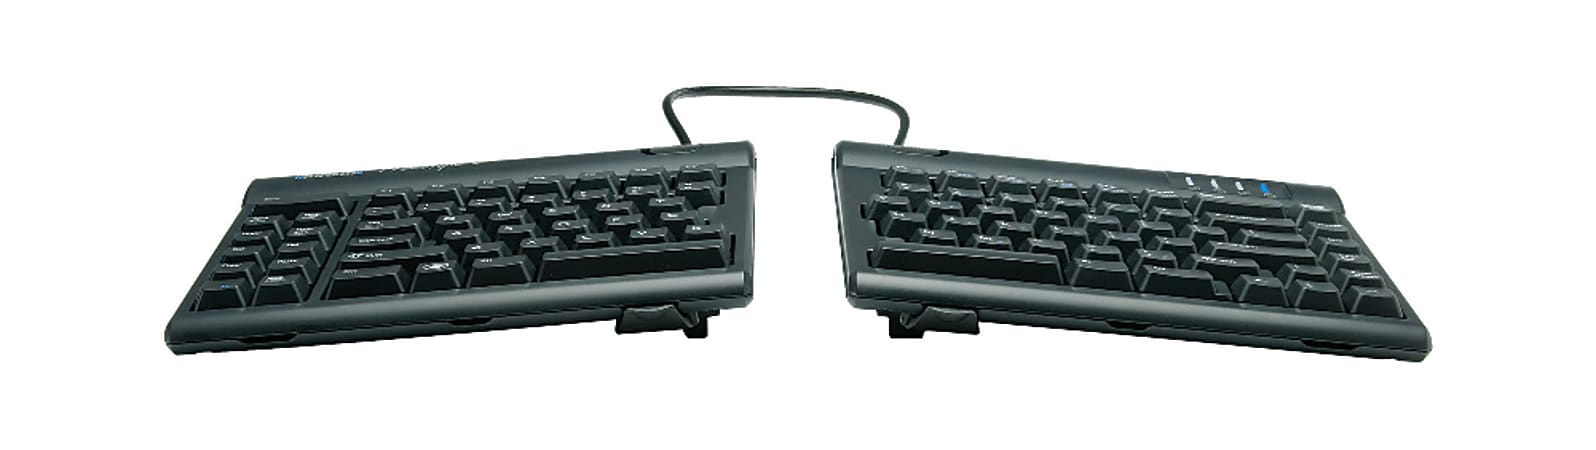 Kinesis® Freestyle®2 Keyboard For Mac